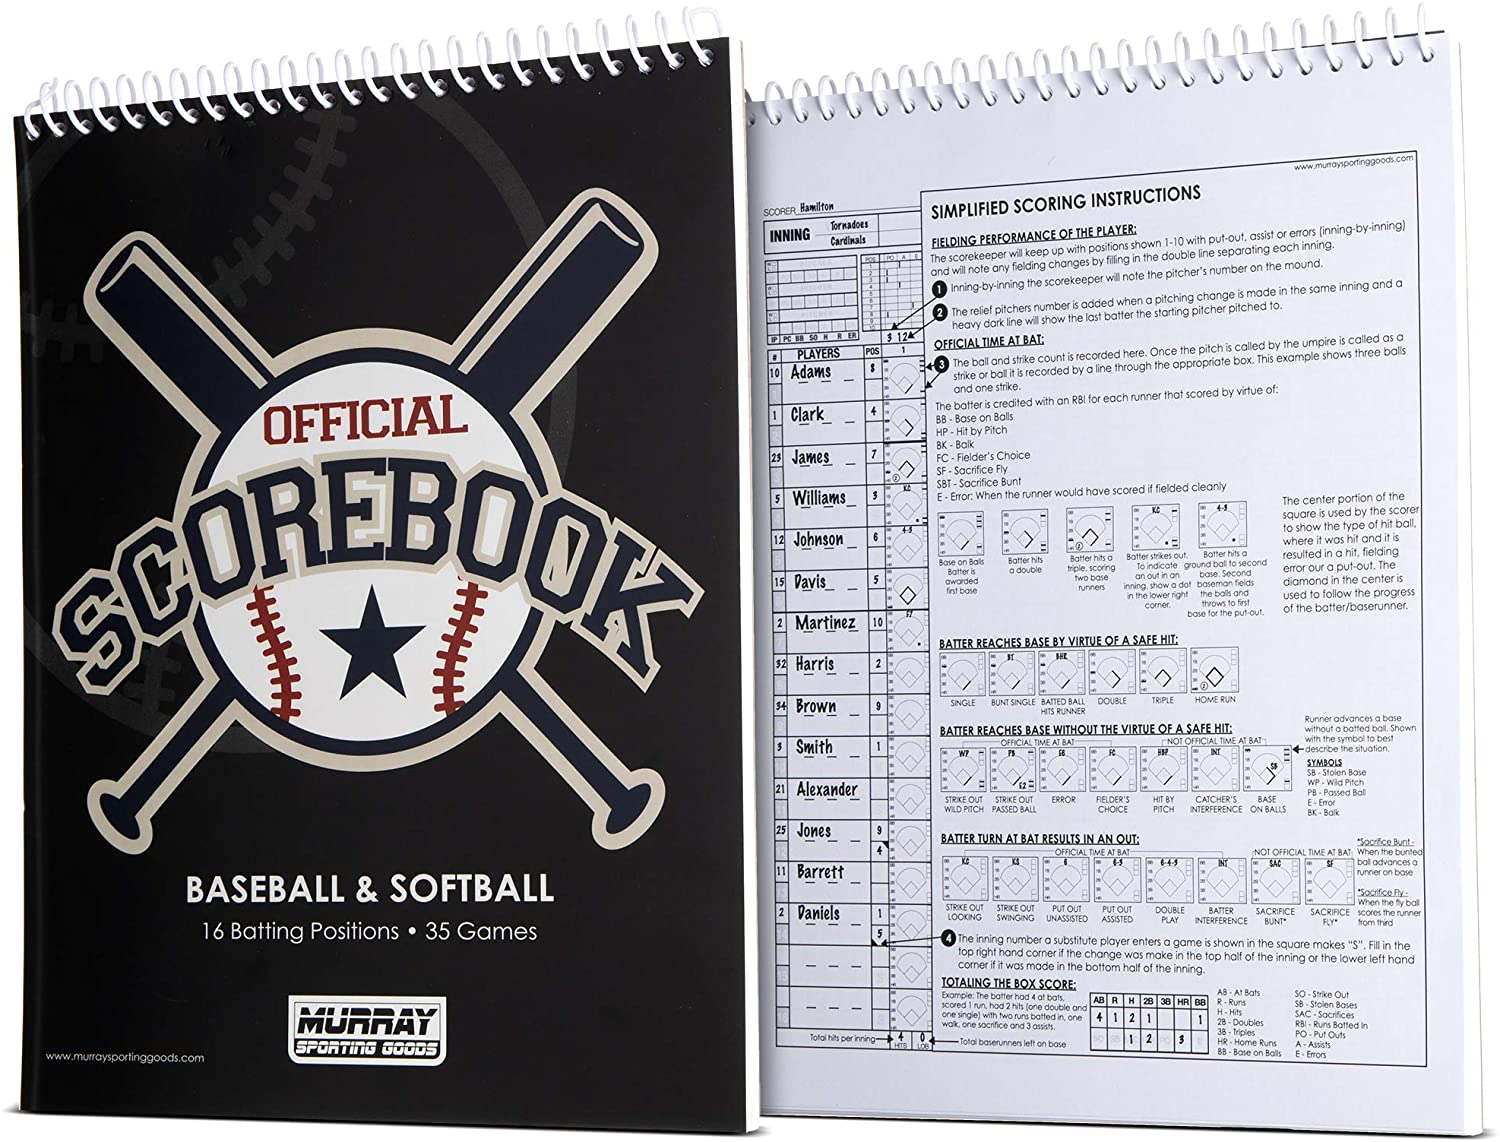 The 10 Best Baseball Scorebooks (2021 Update)